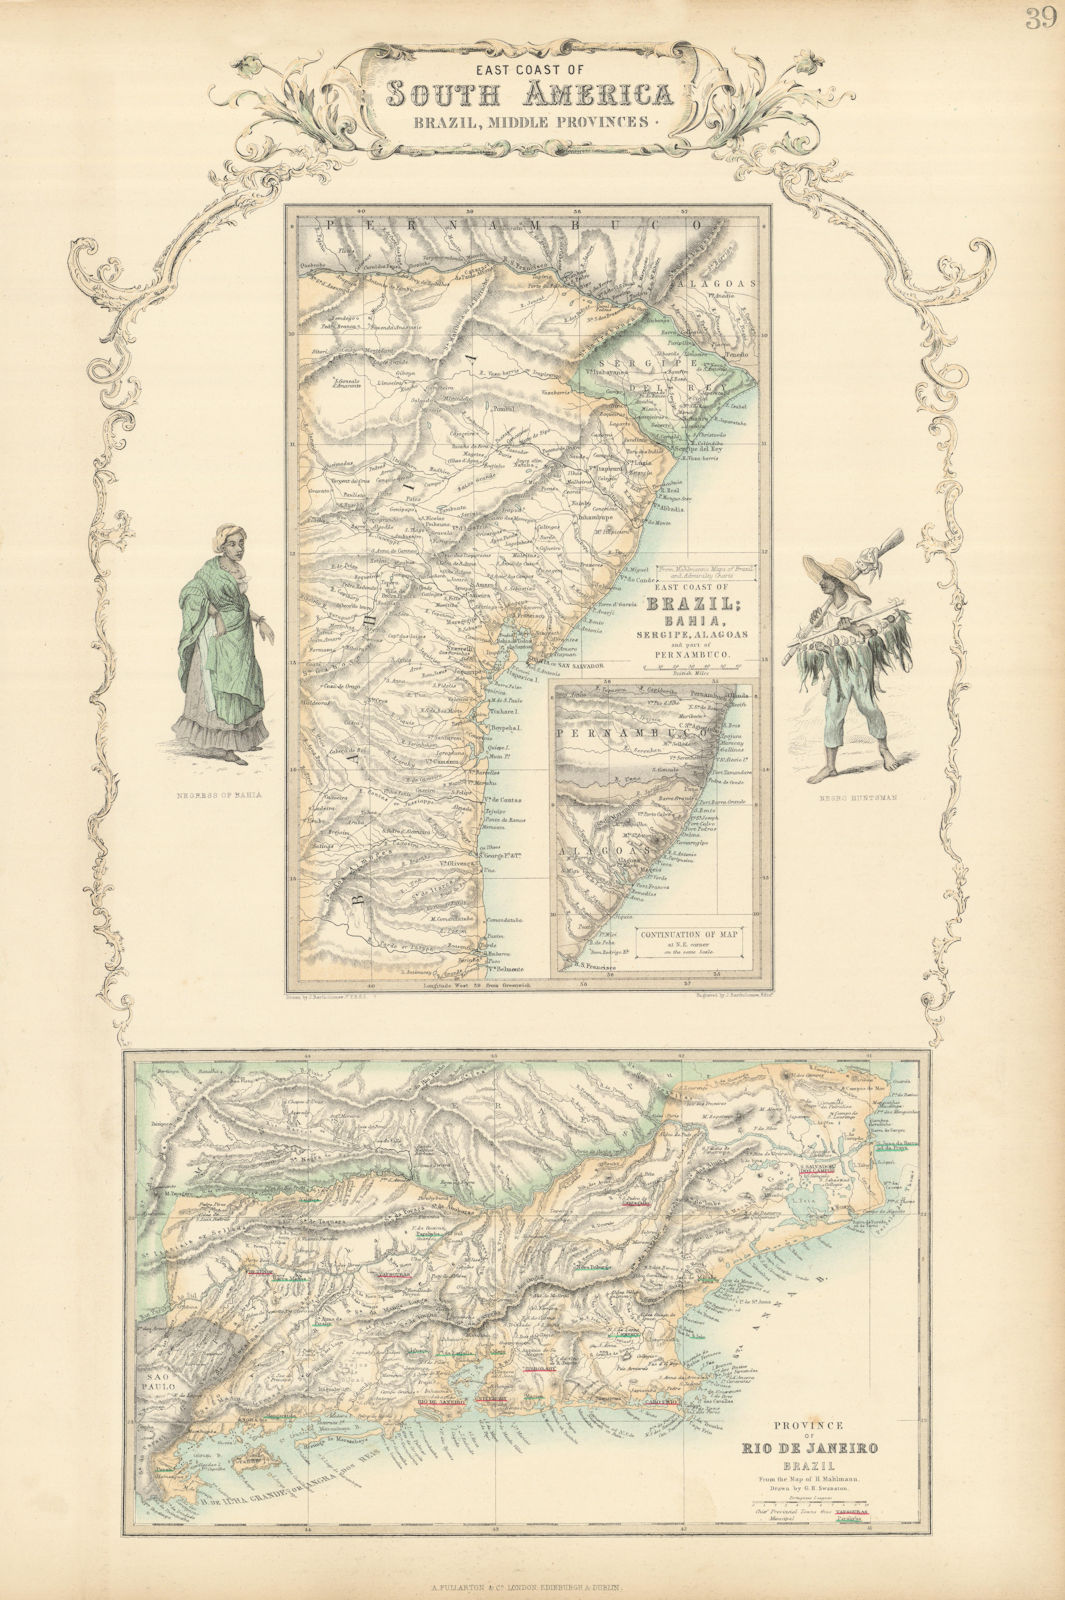 Brazil. South America East Coast. Bahia. Rio de Janeiro. SWANSTON 1860 old map